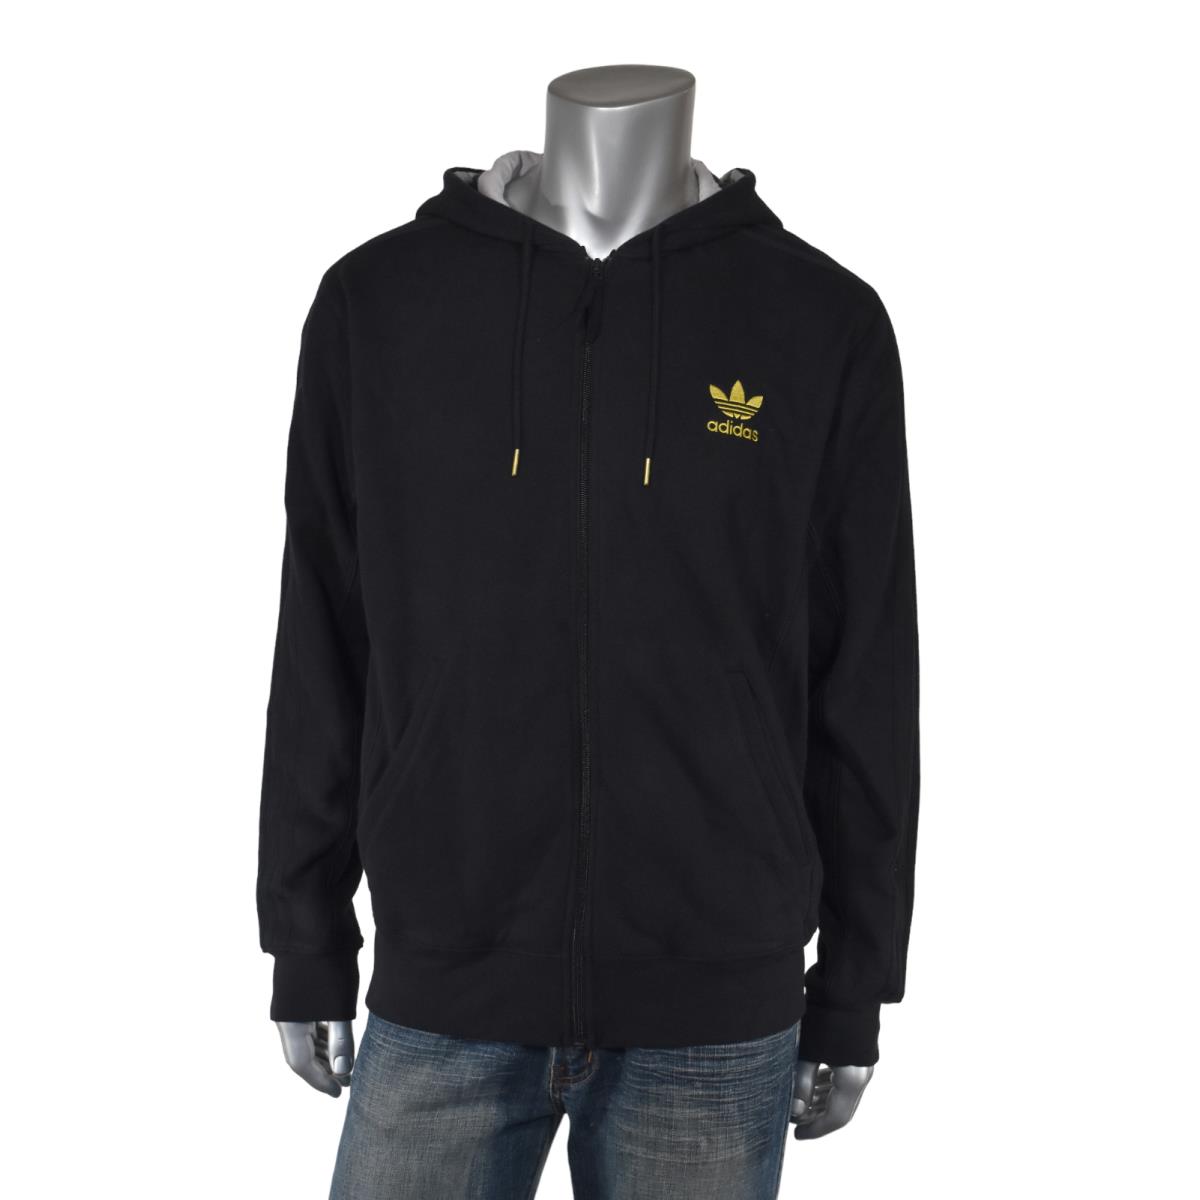 Adidas Originals Black Fleece 3 Stripe Hoodie Track Top Jacket XL